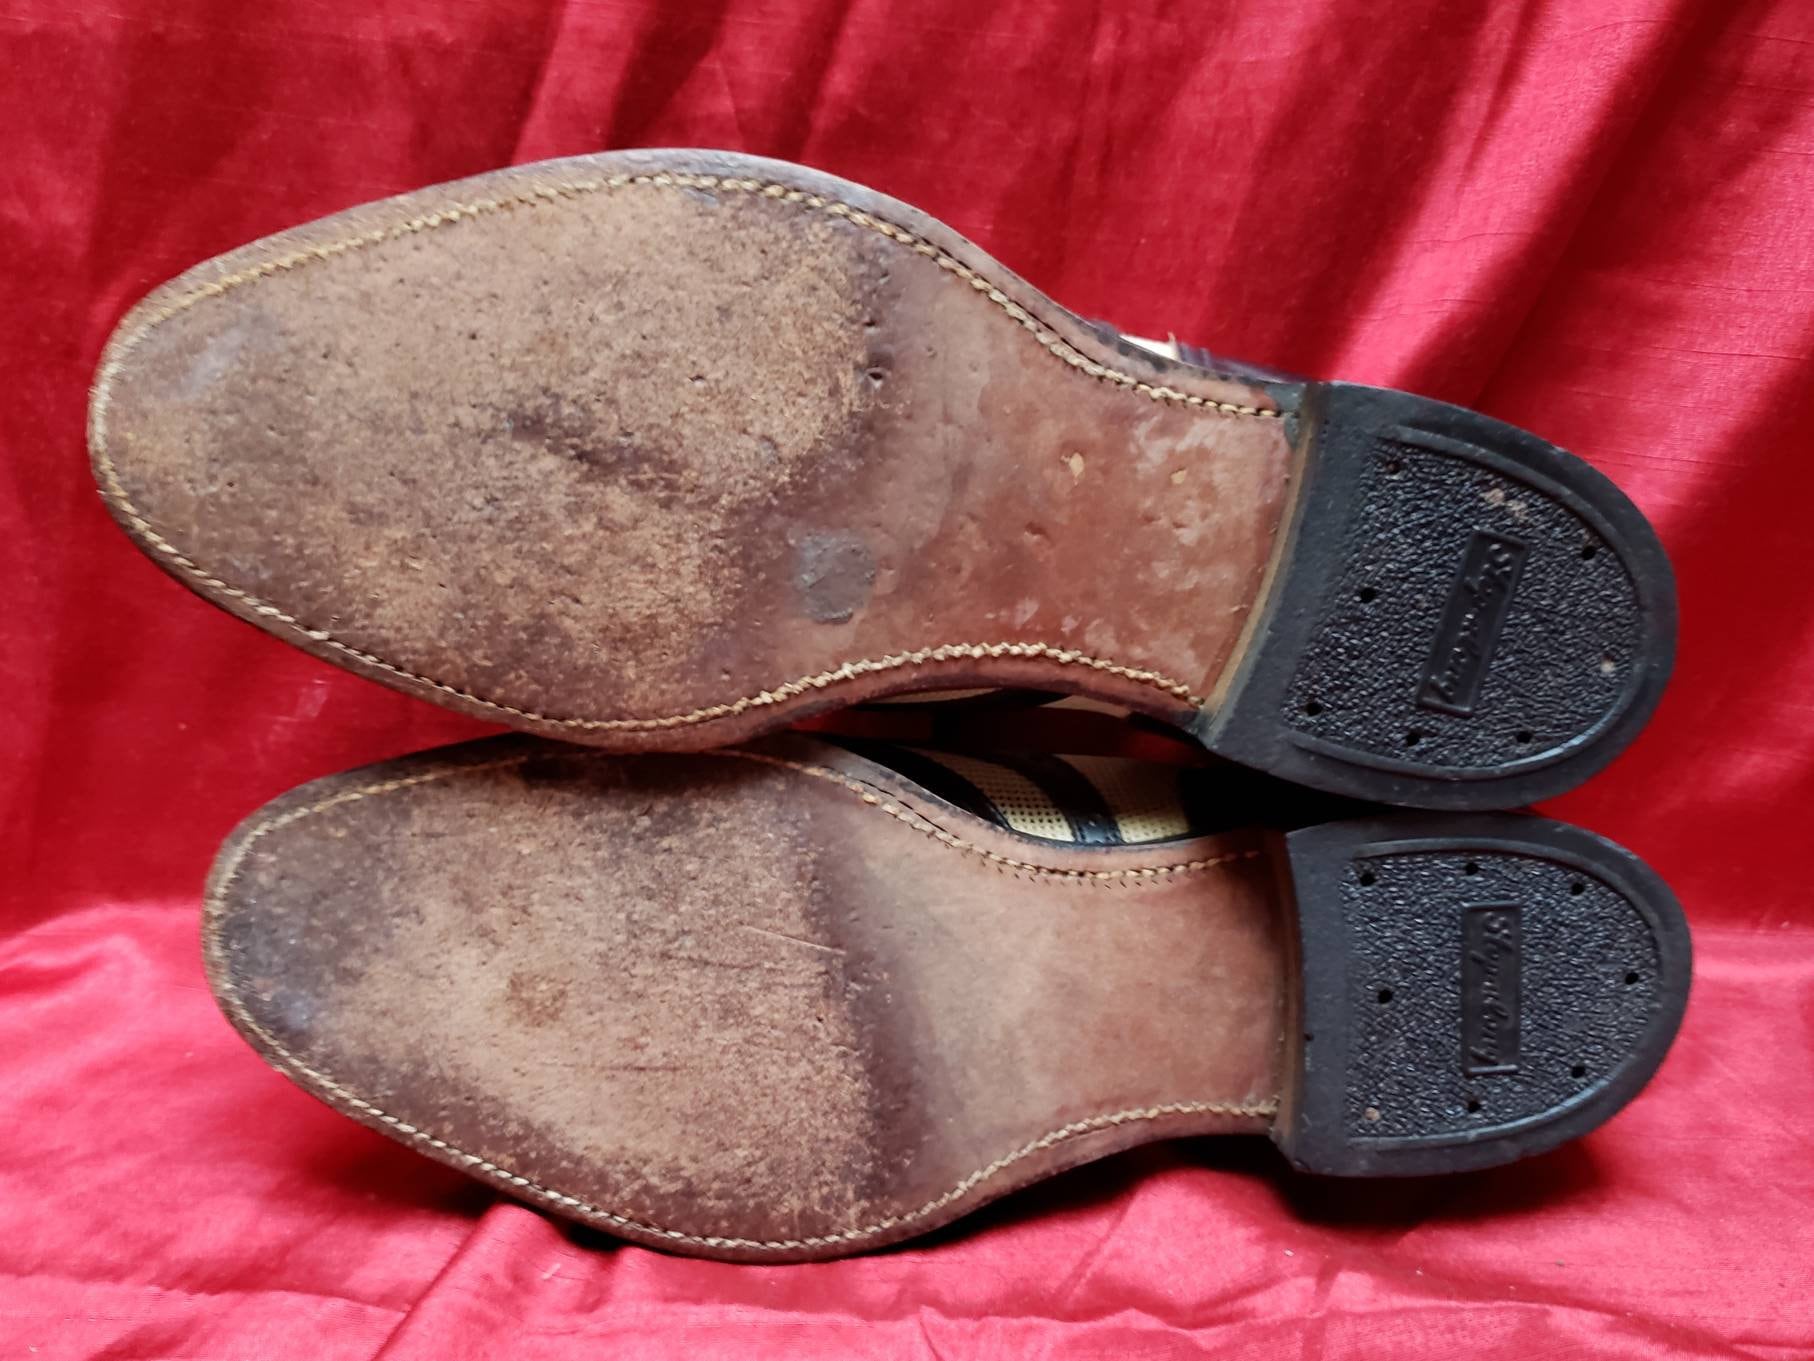 Mens Taupe Distressed Vintage Style Wingtip Dress Shoes Antonio Cerrel